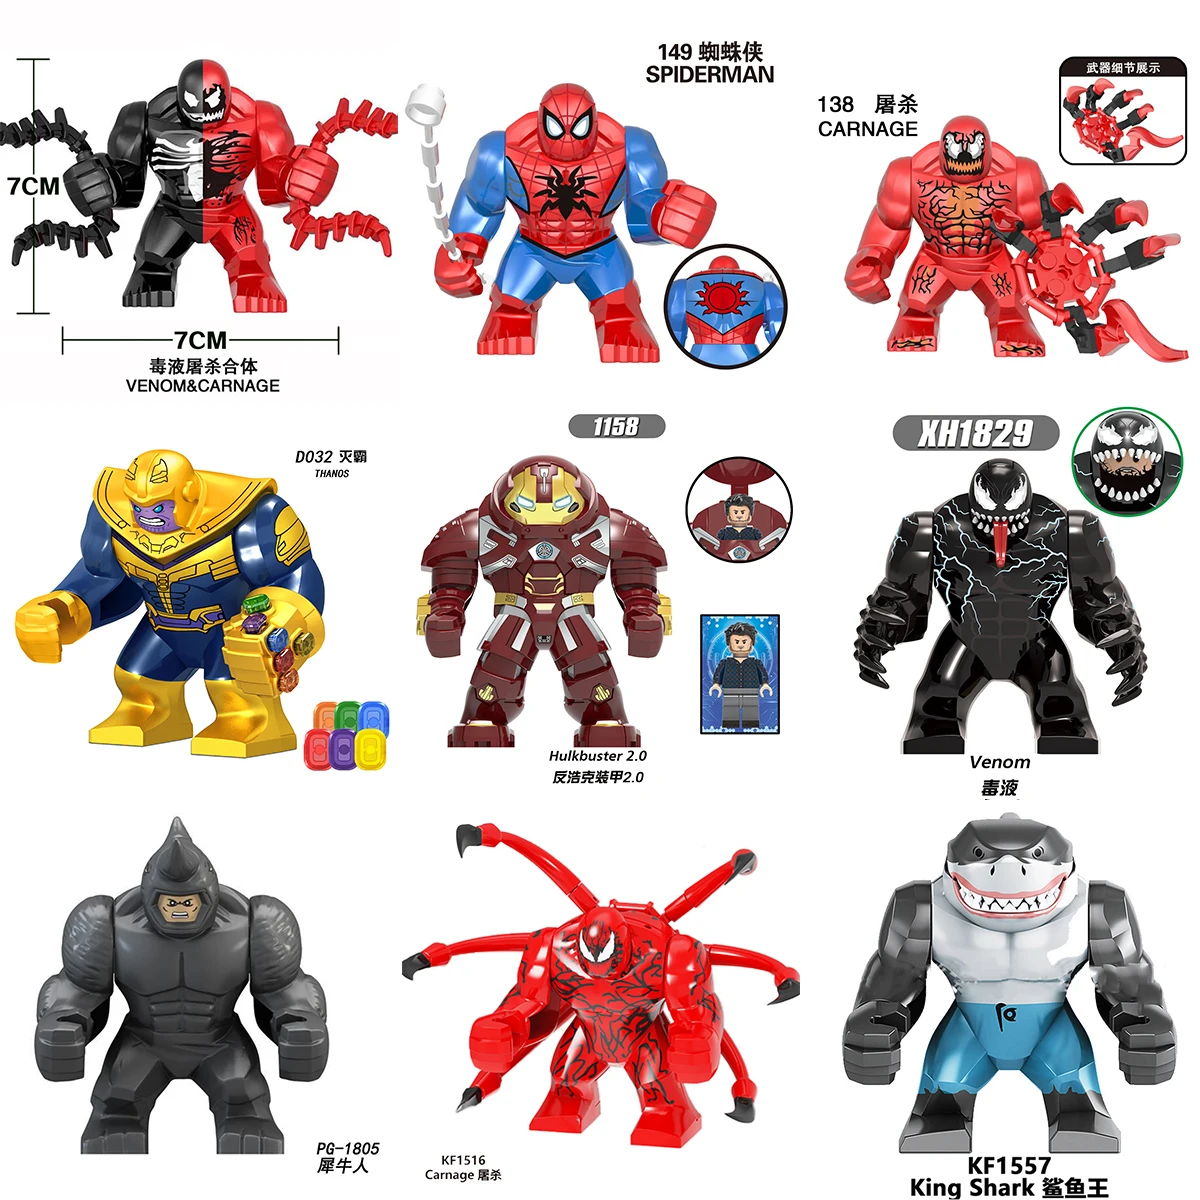 

Disney Building Blocks Avengers Superheroes Iron Man Spider-man Hulk Thanos Wolverine Venom Action Figure Toys for Children Gift